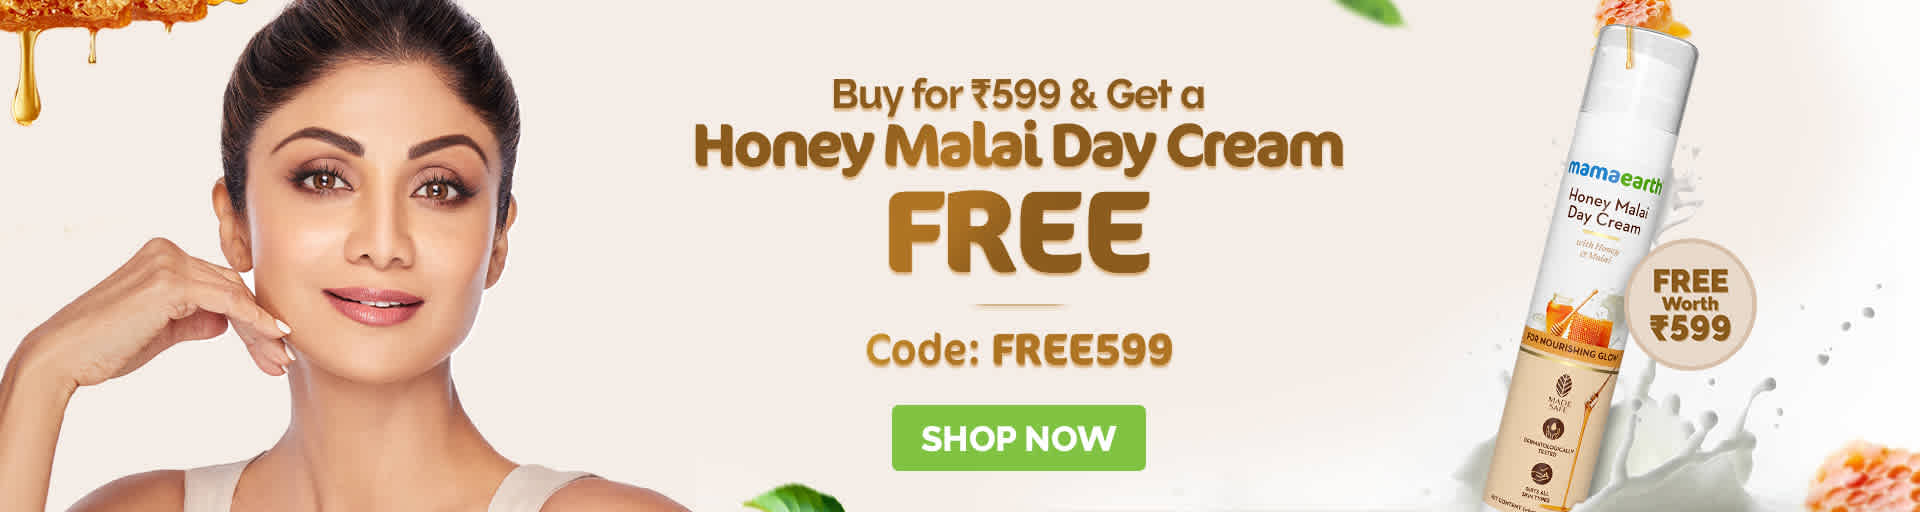 Honey-Malai